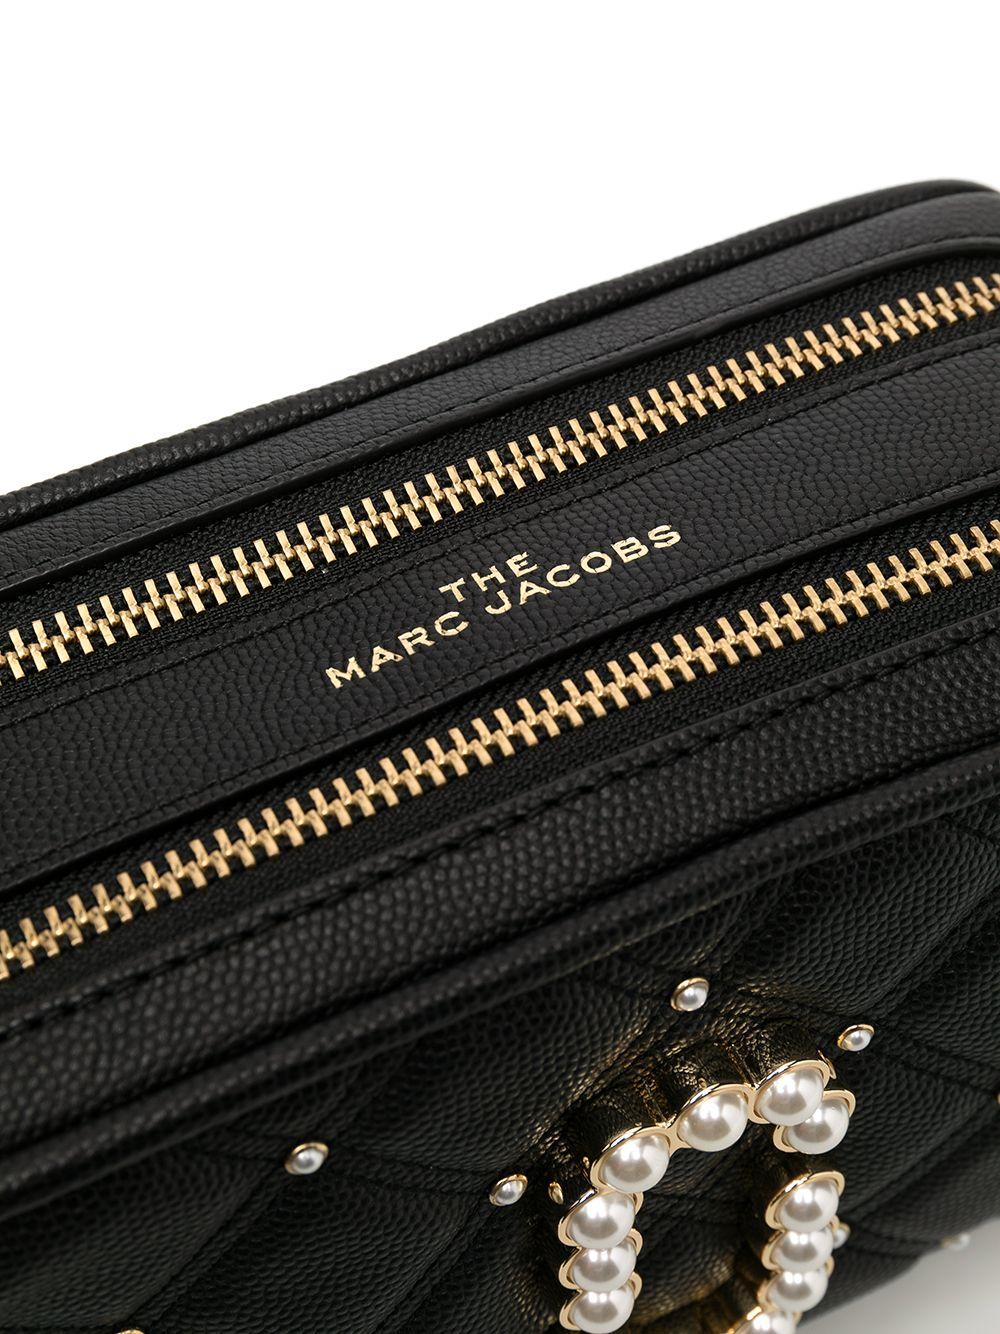 Snapshot crossbody bag Marc Jacobs Black in Suede - 31289654